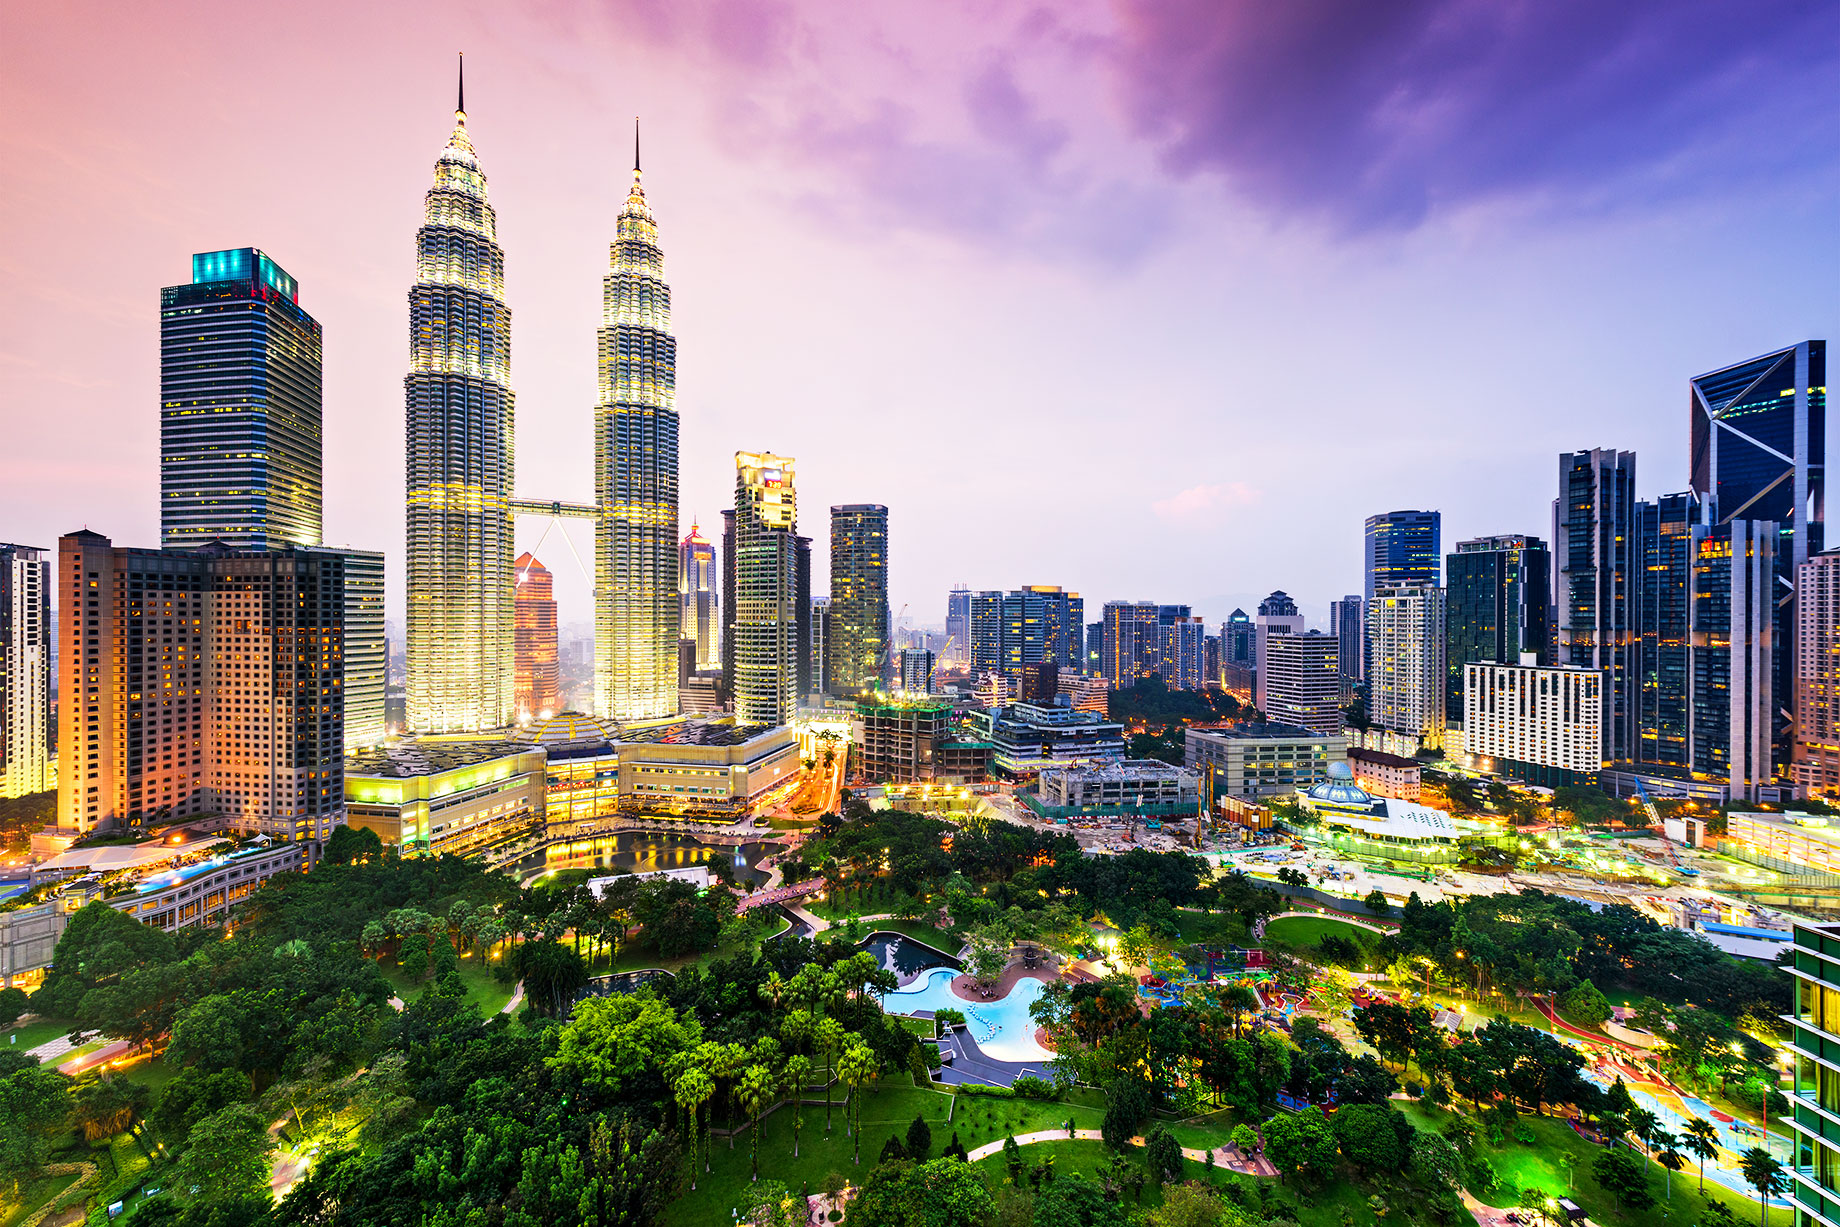 Petronas Twin Towers - KLCC Park - Kuala Lumpur, Malaysia